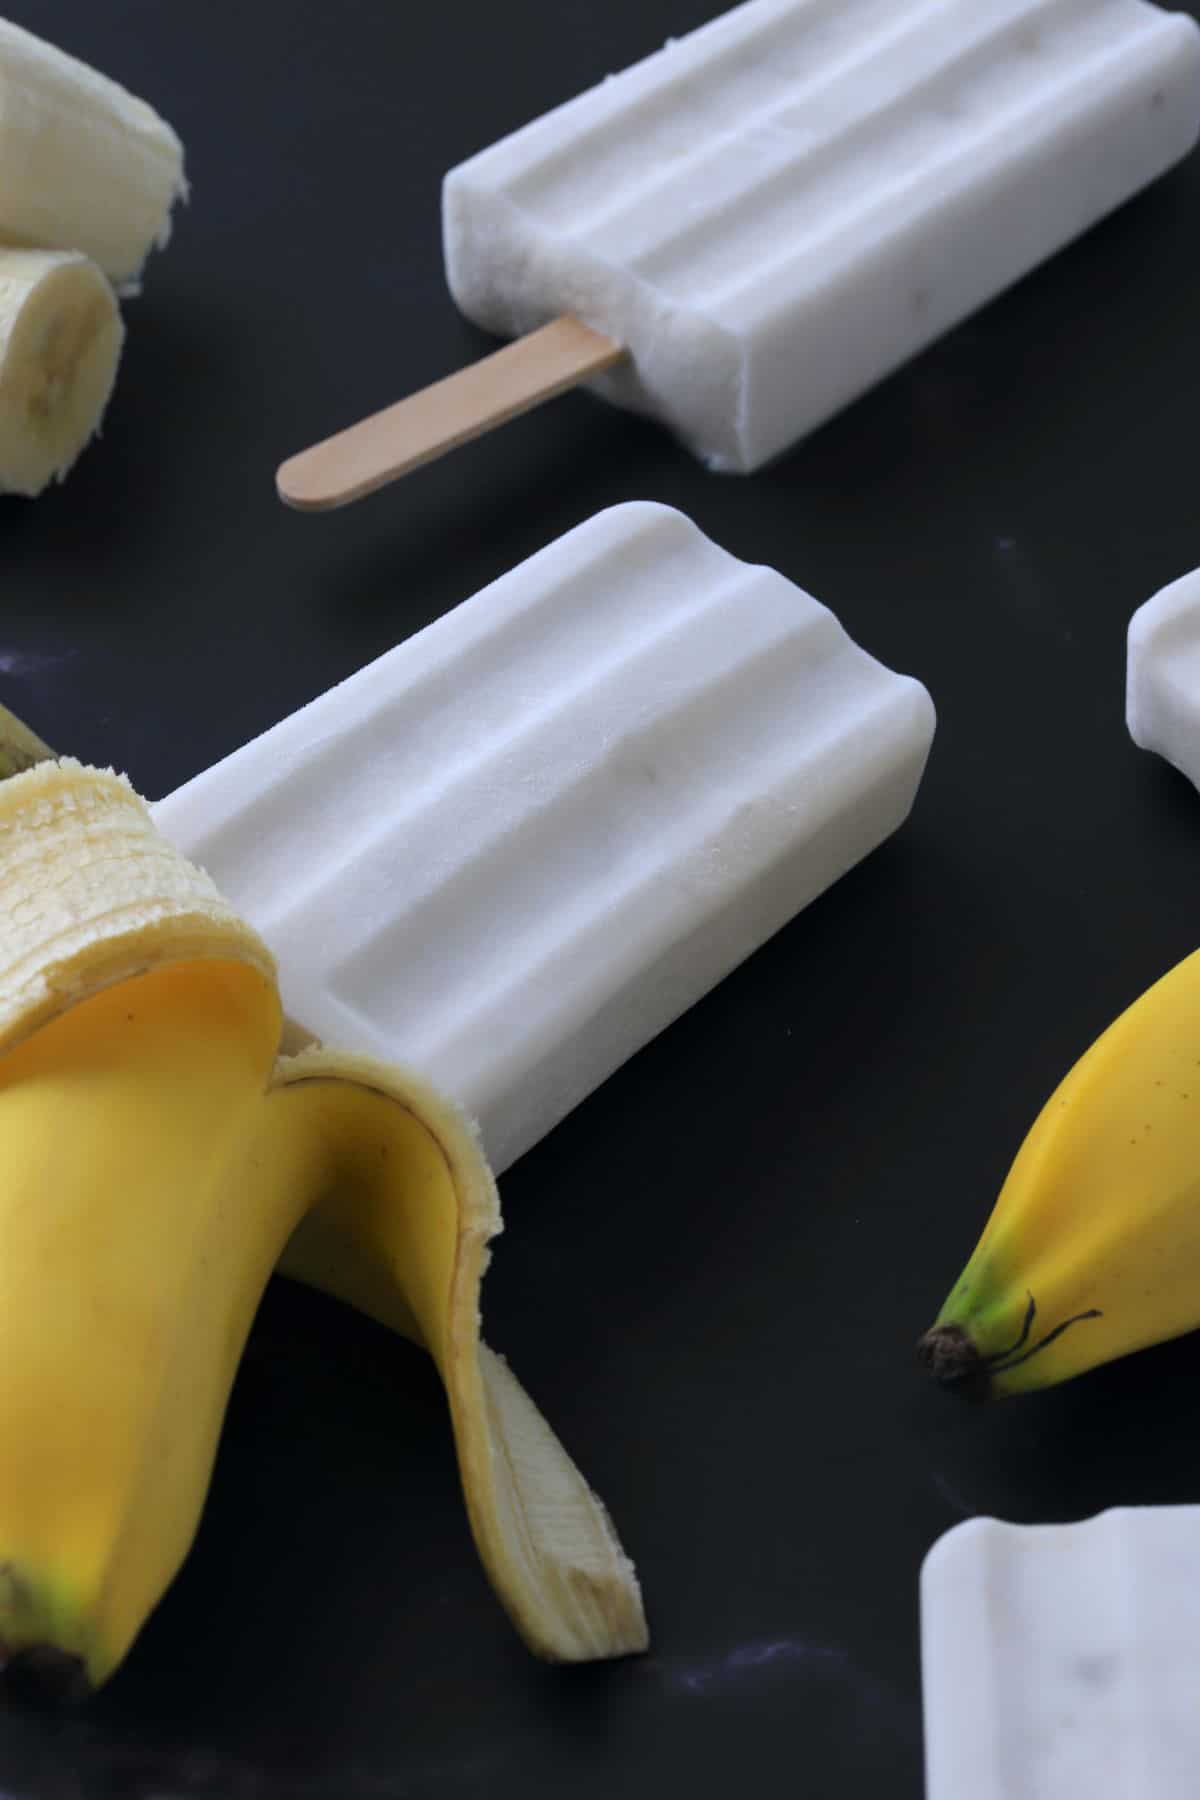 sugar free banana popsicles laying flat with black background and fresh bananas.